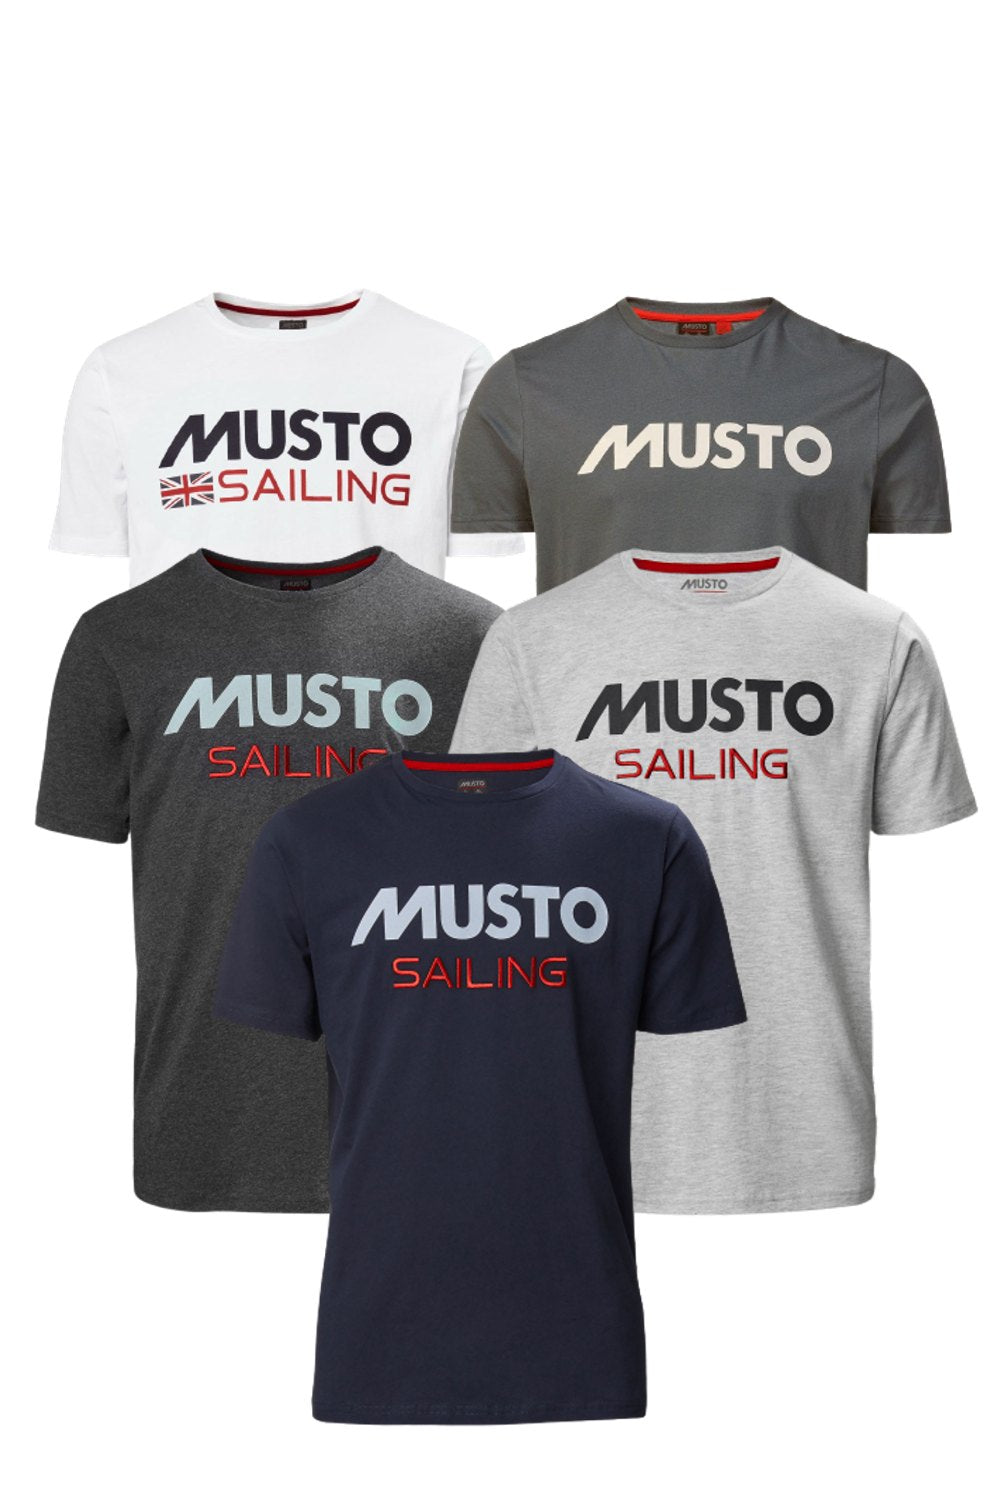 Musto Sailing T-Shirt In White, Turbulance, Carbon, Grey Melange and Navy